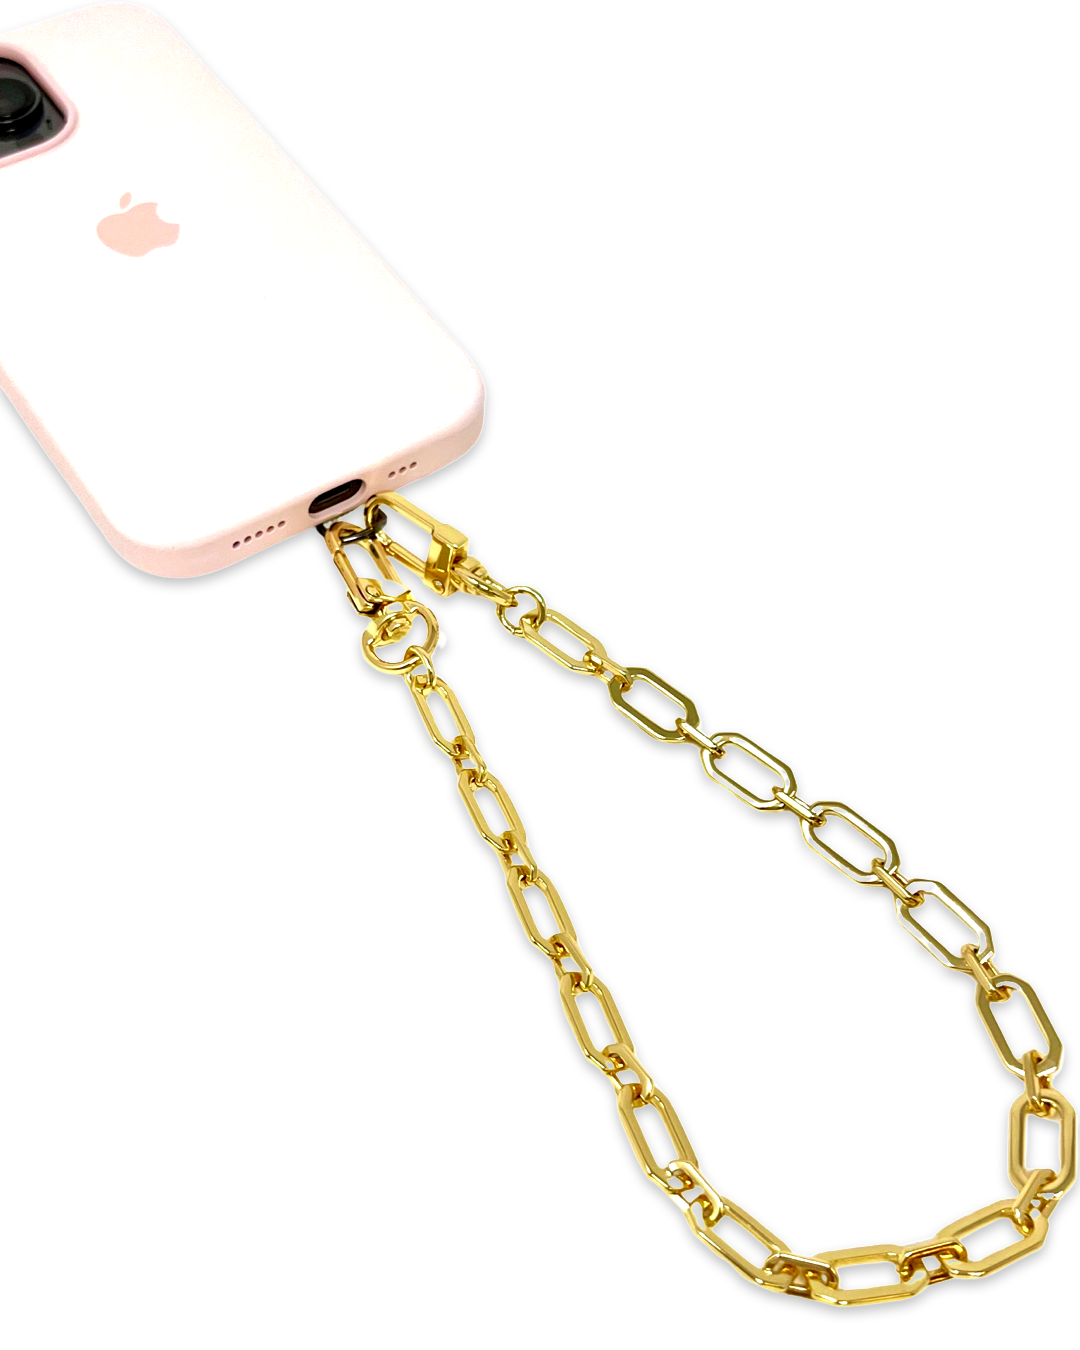 Eva Wristlet Phone Chain in Gold